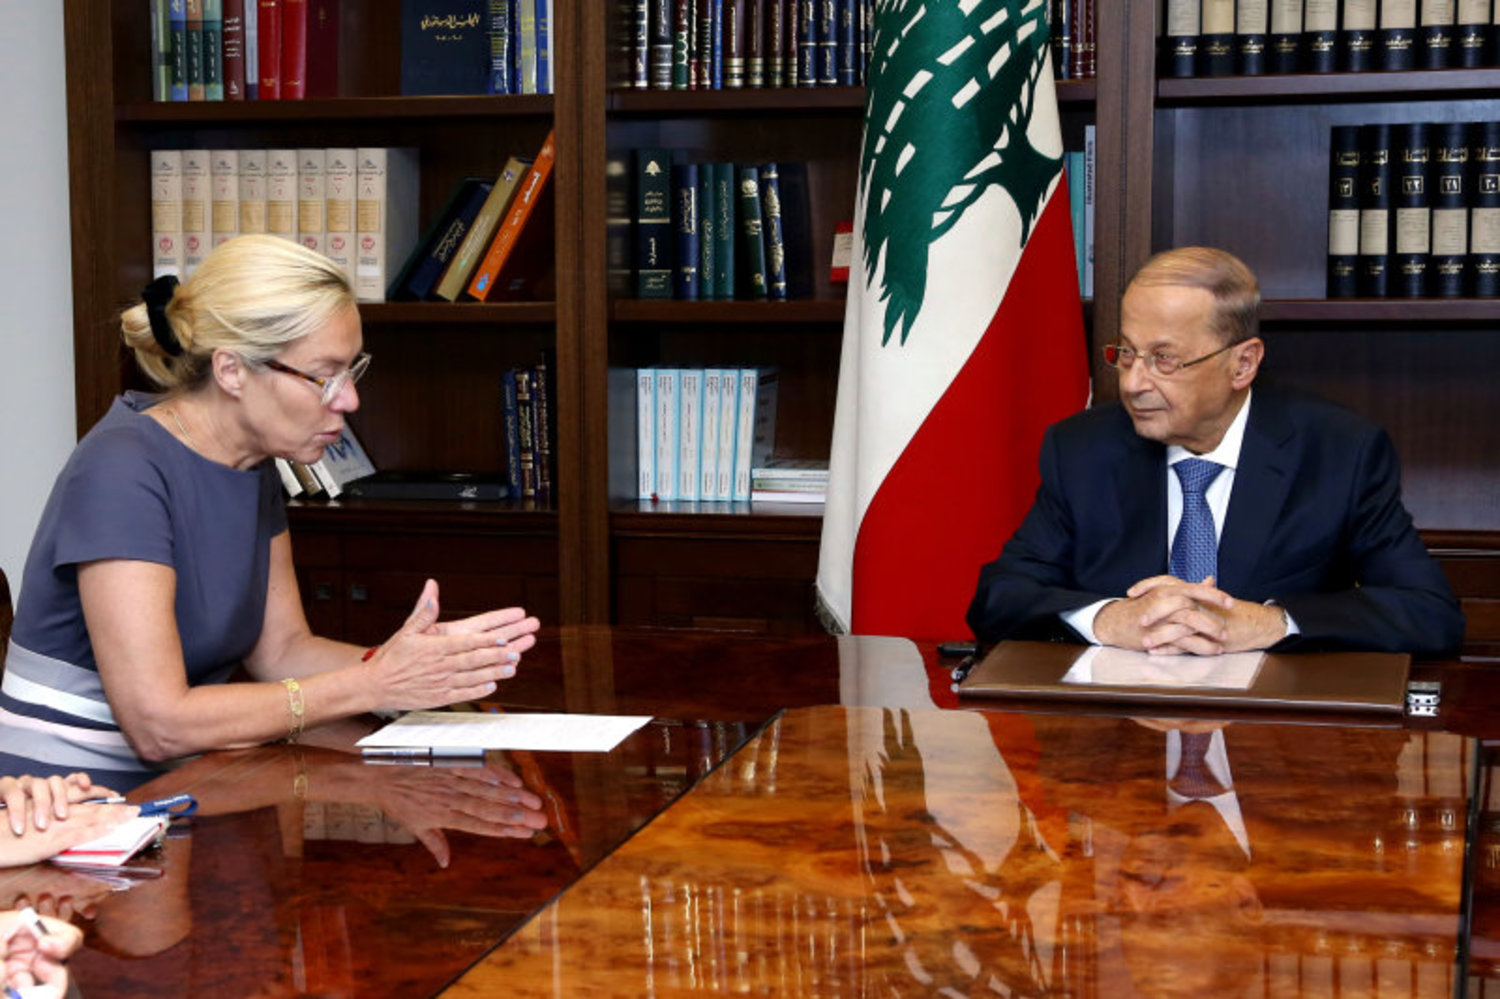 President Michel Aoun meets with UN Special Coordinator for Lebanon Sigrid Kaag at Baabda Palace. (Dalati and Nohra photo)